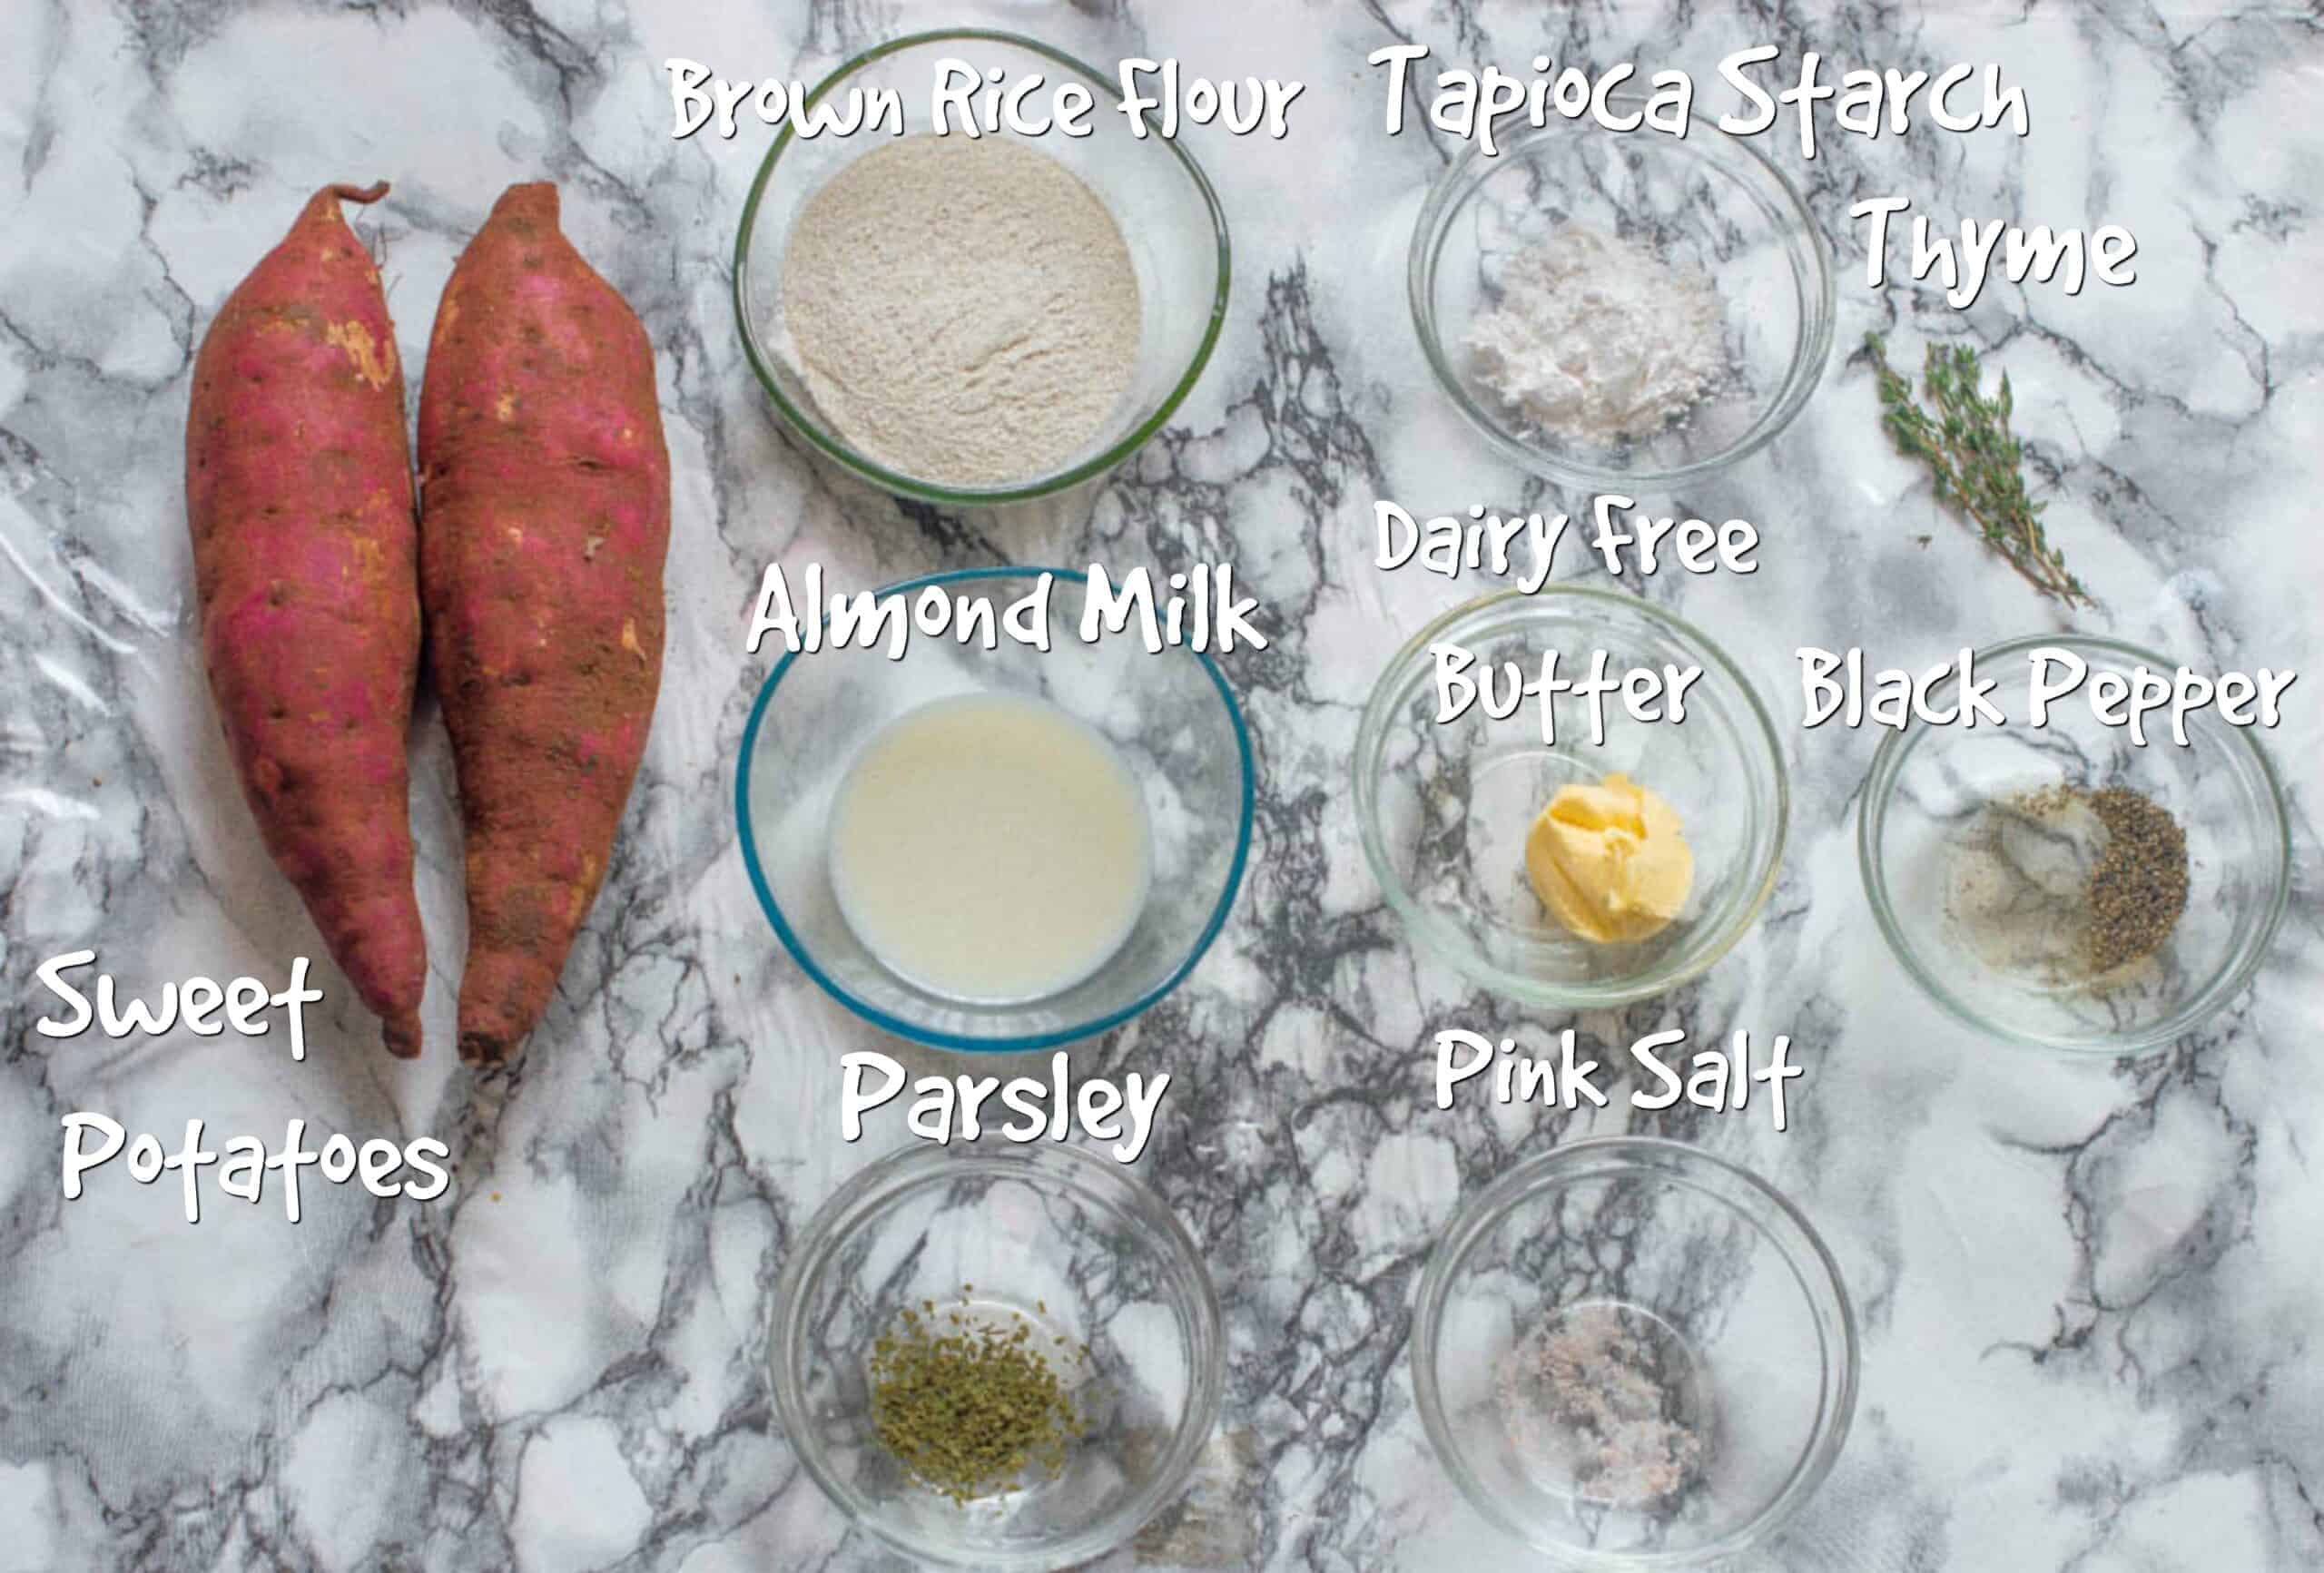 Ingredients for Irish Potato Bread